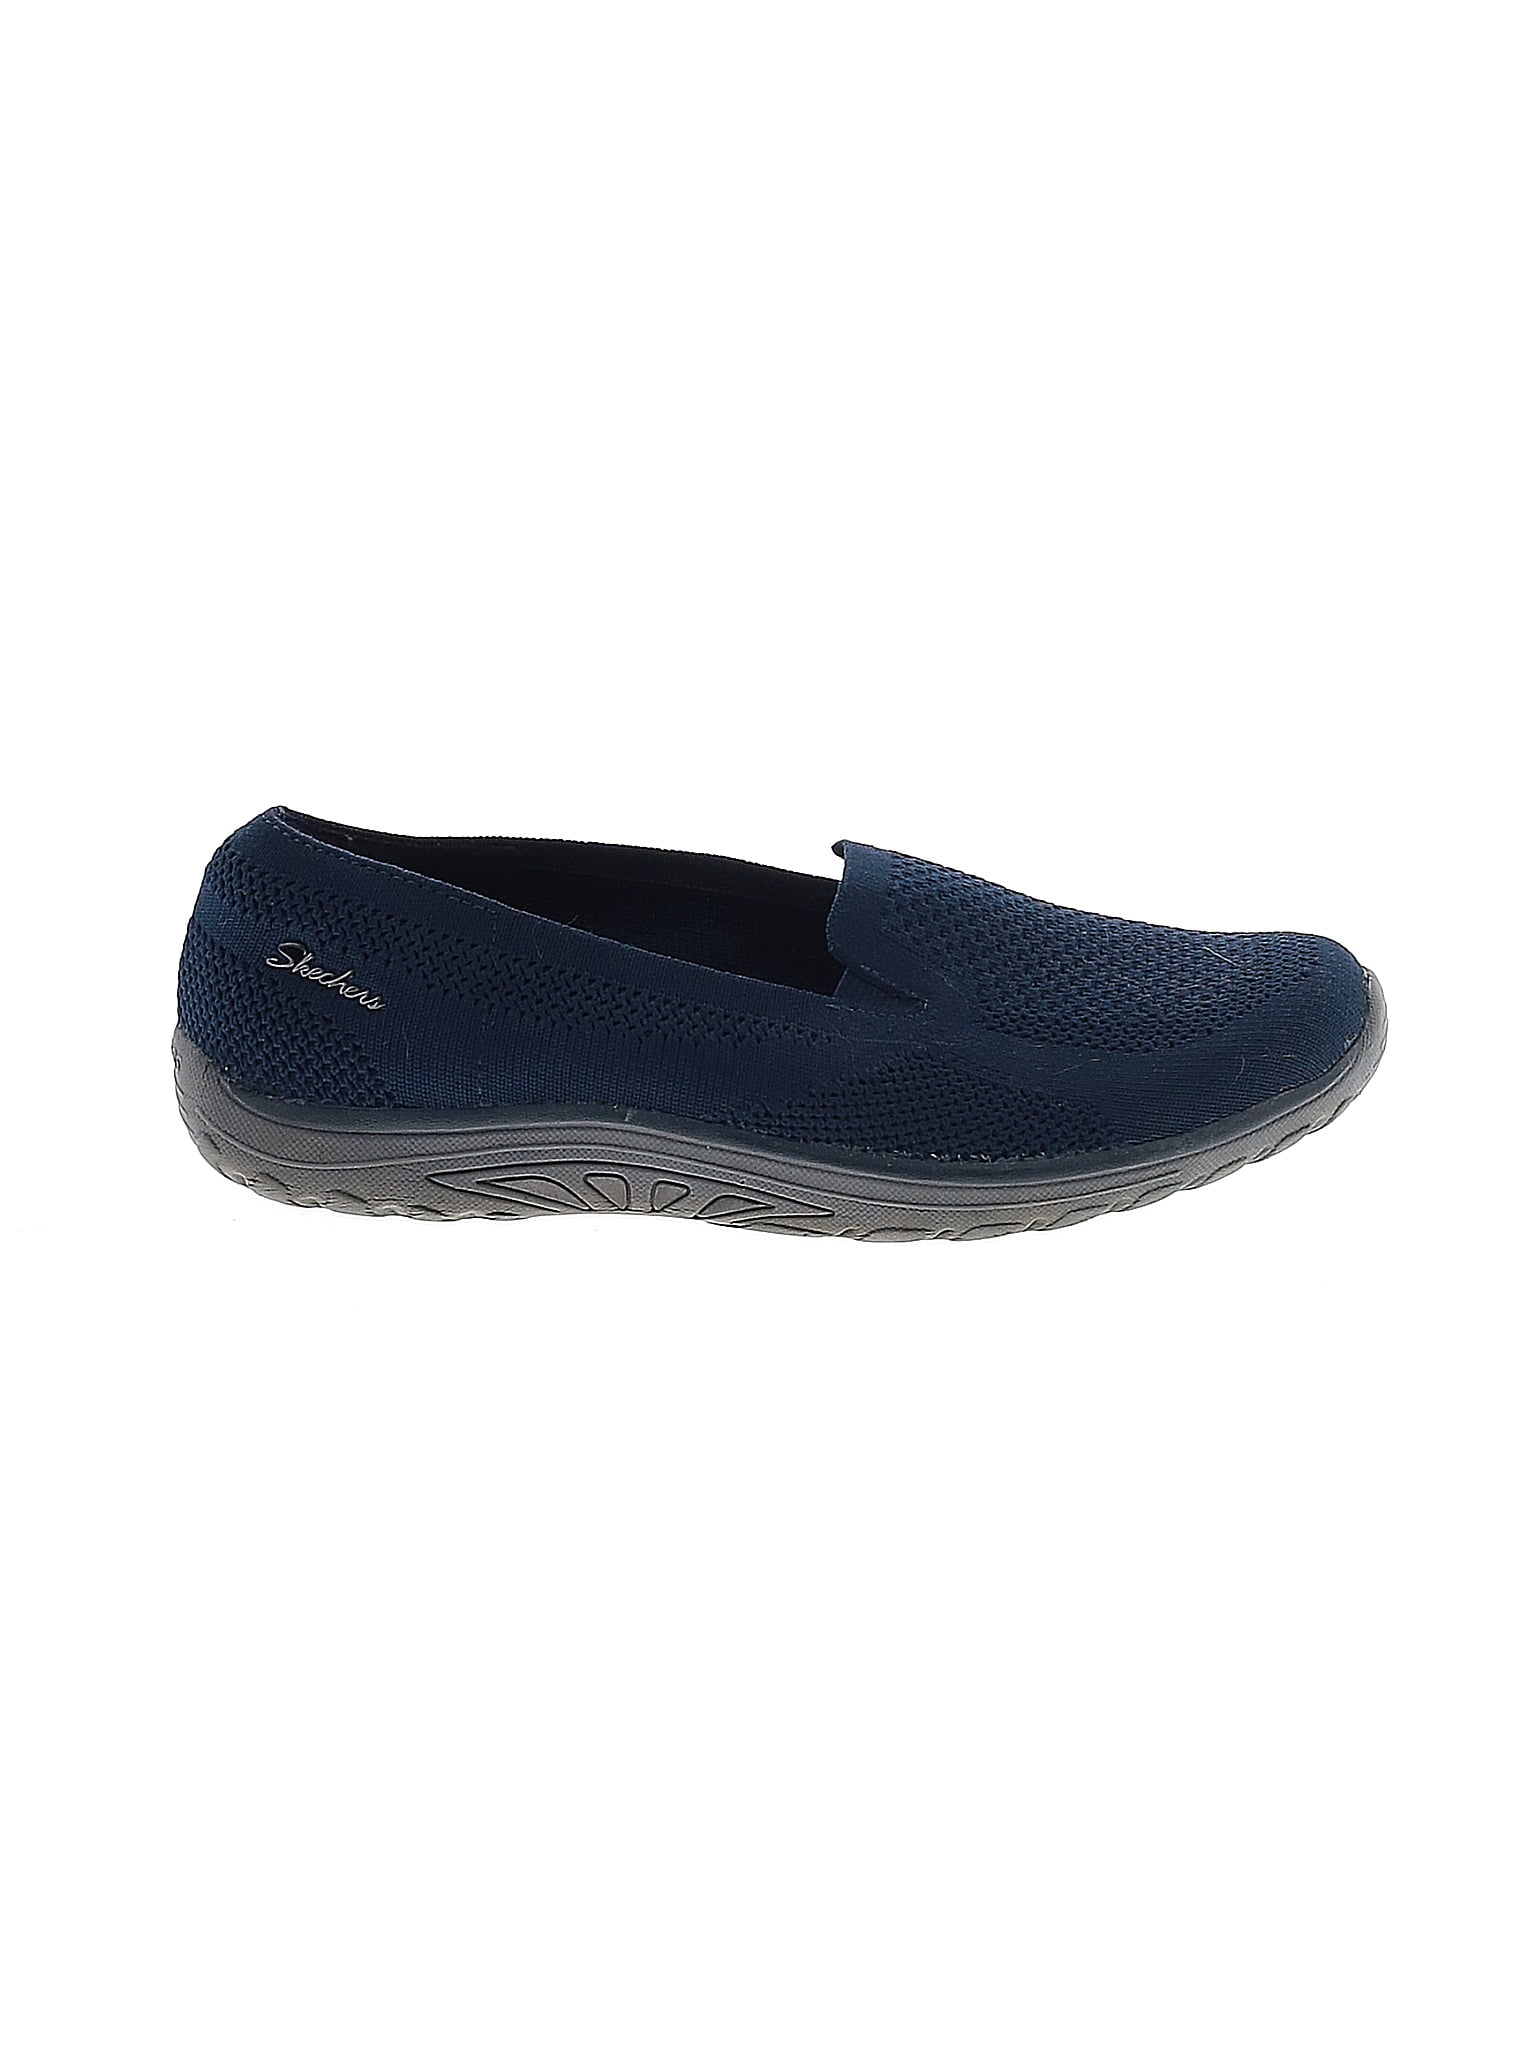 Skechers Solid Navy Blue Flats Size 7 - 65% off | thredUP